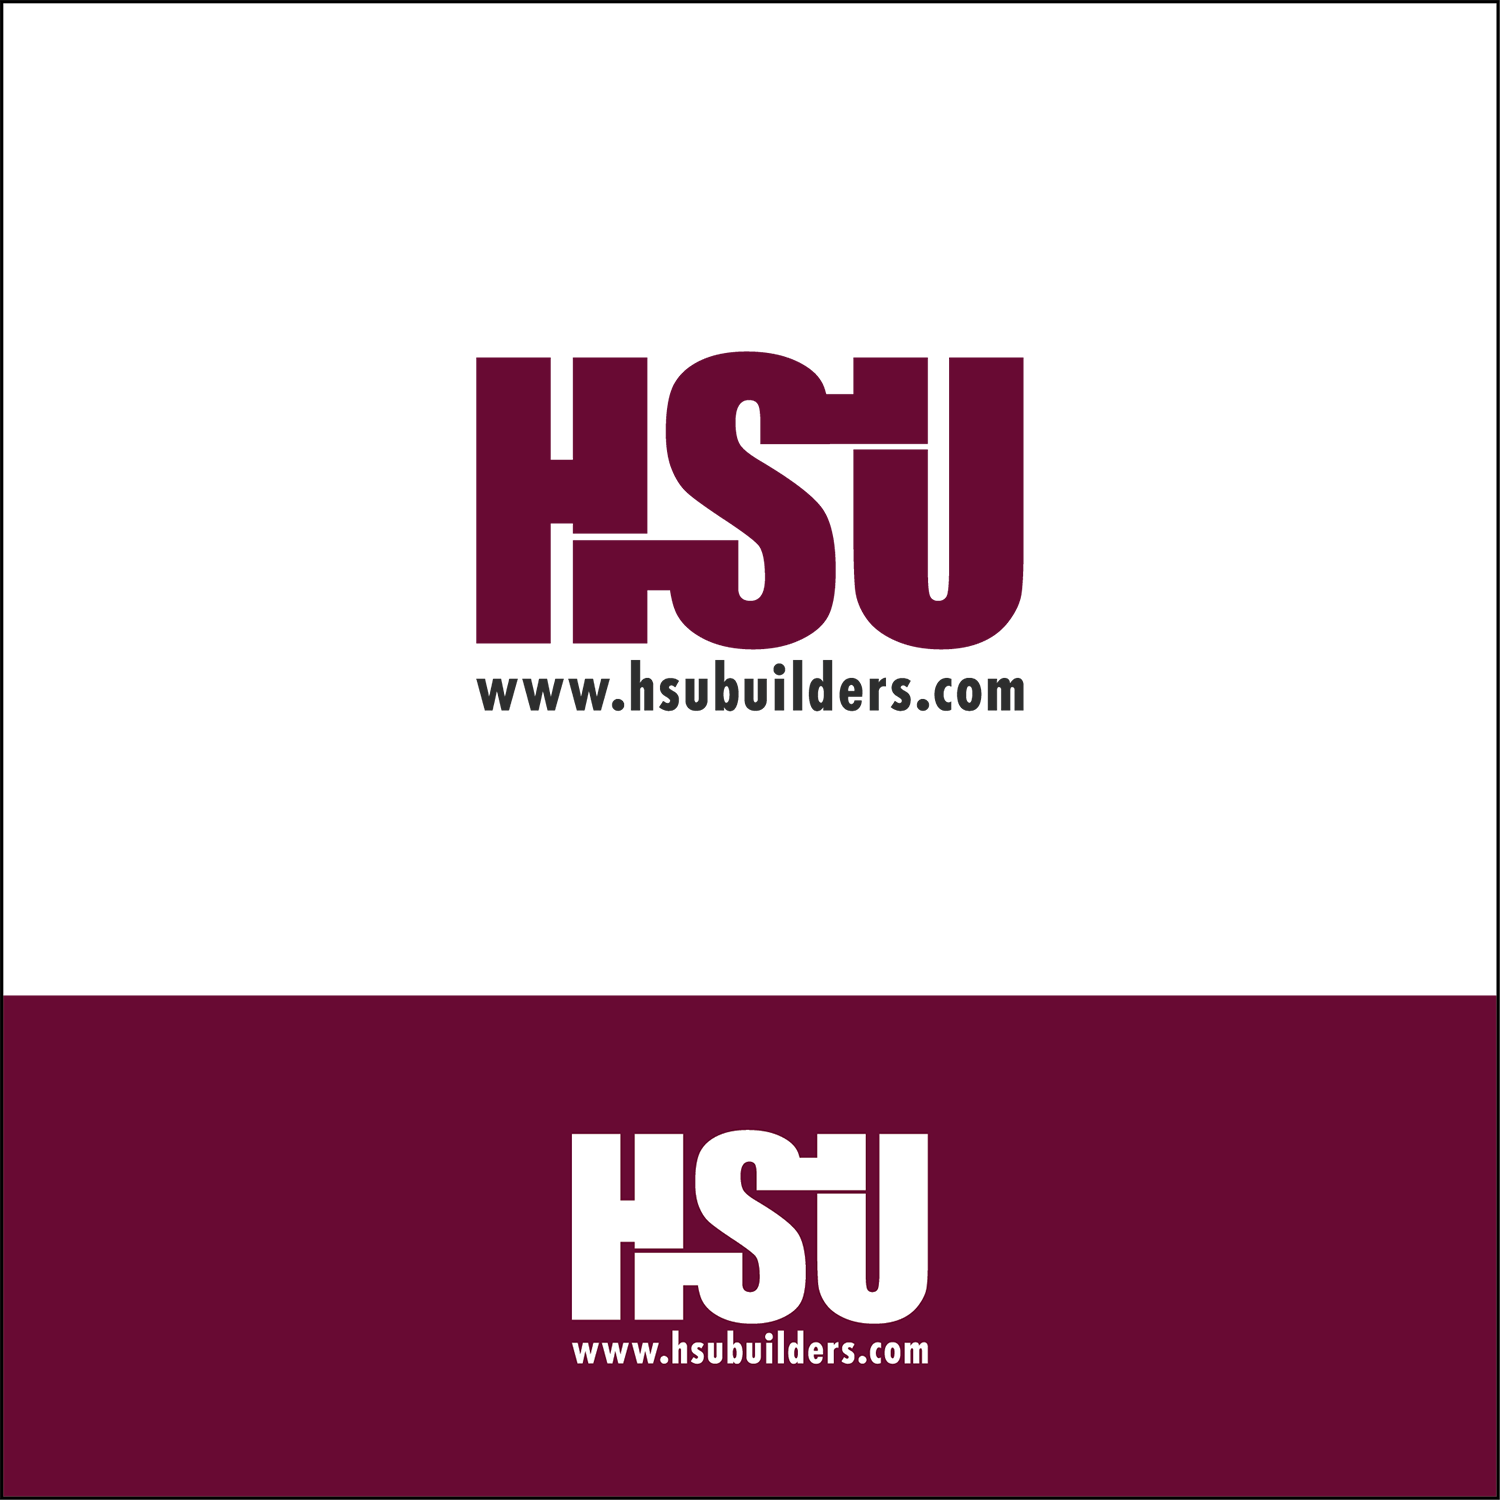 Hsu Logo - Serious, Professional, Construction Company Logo Design for Letters